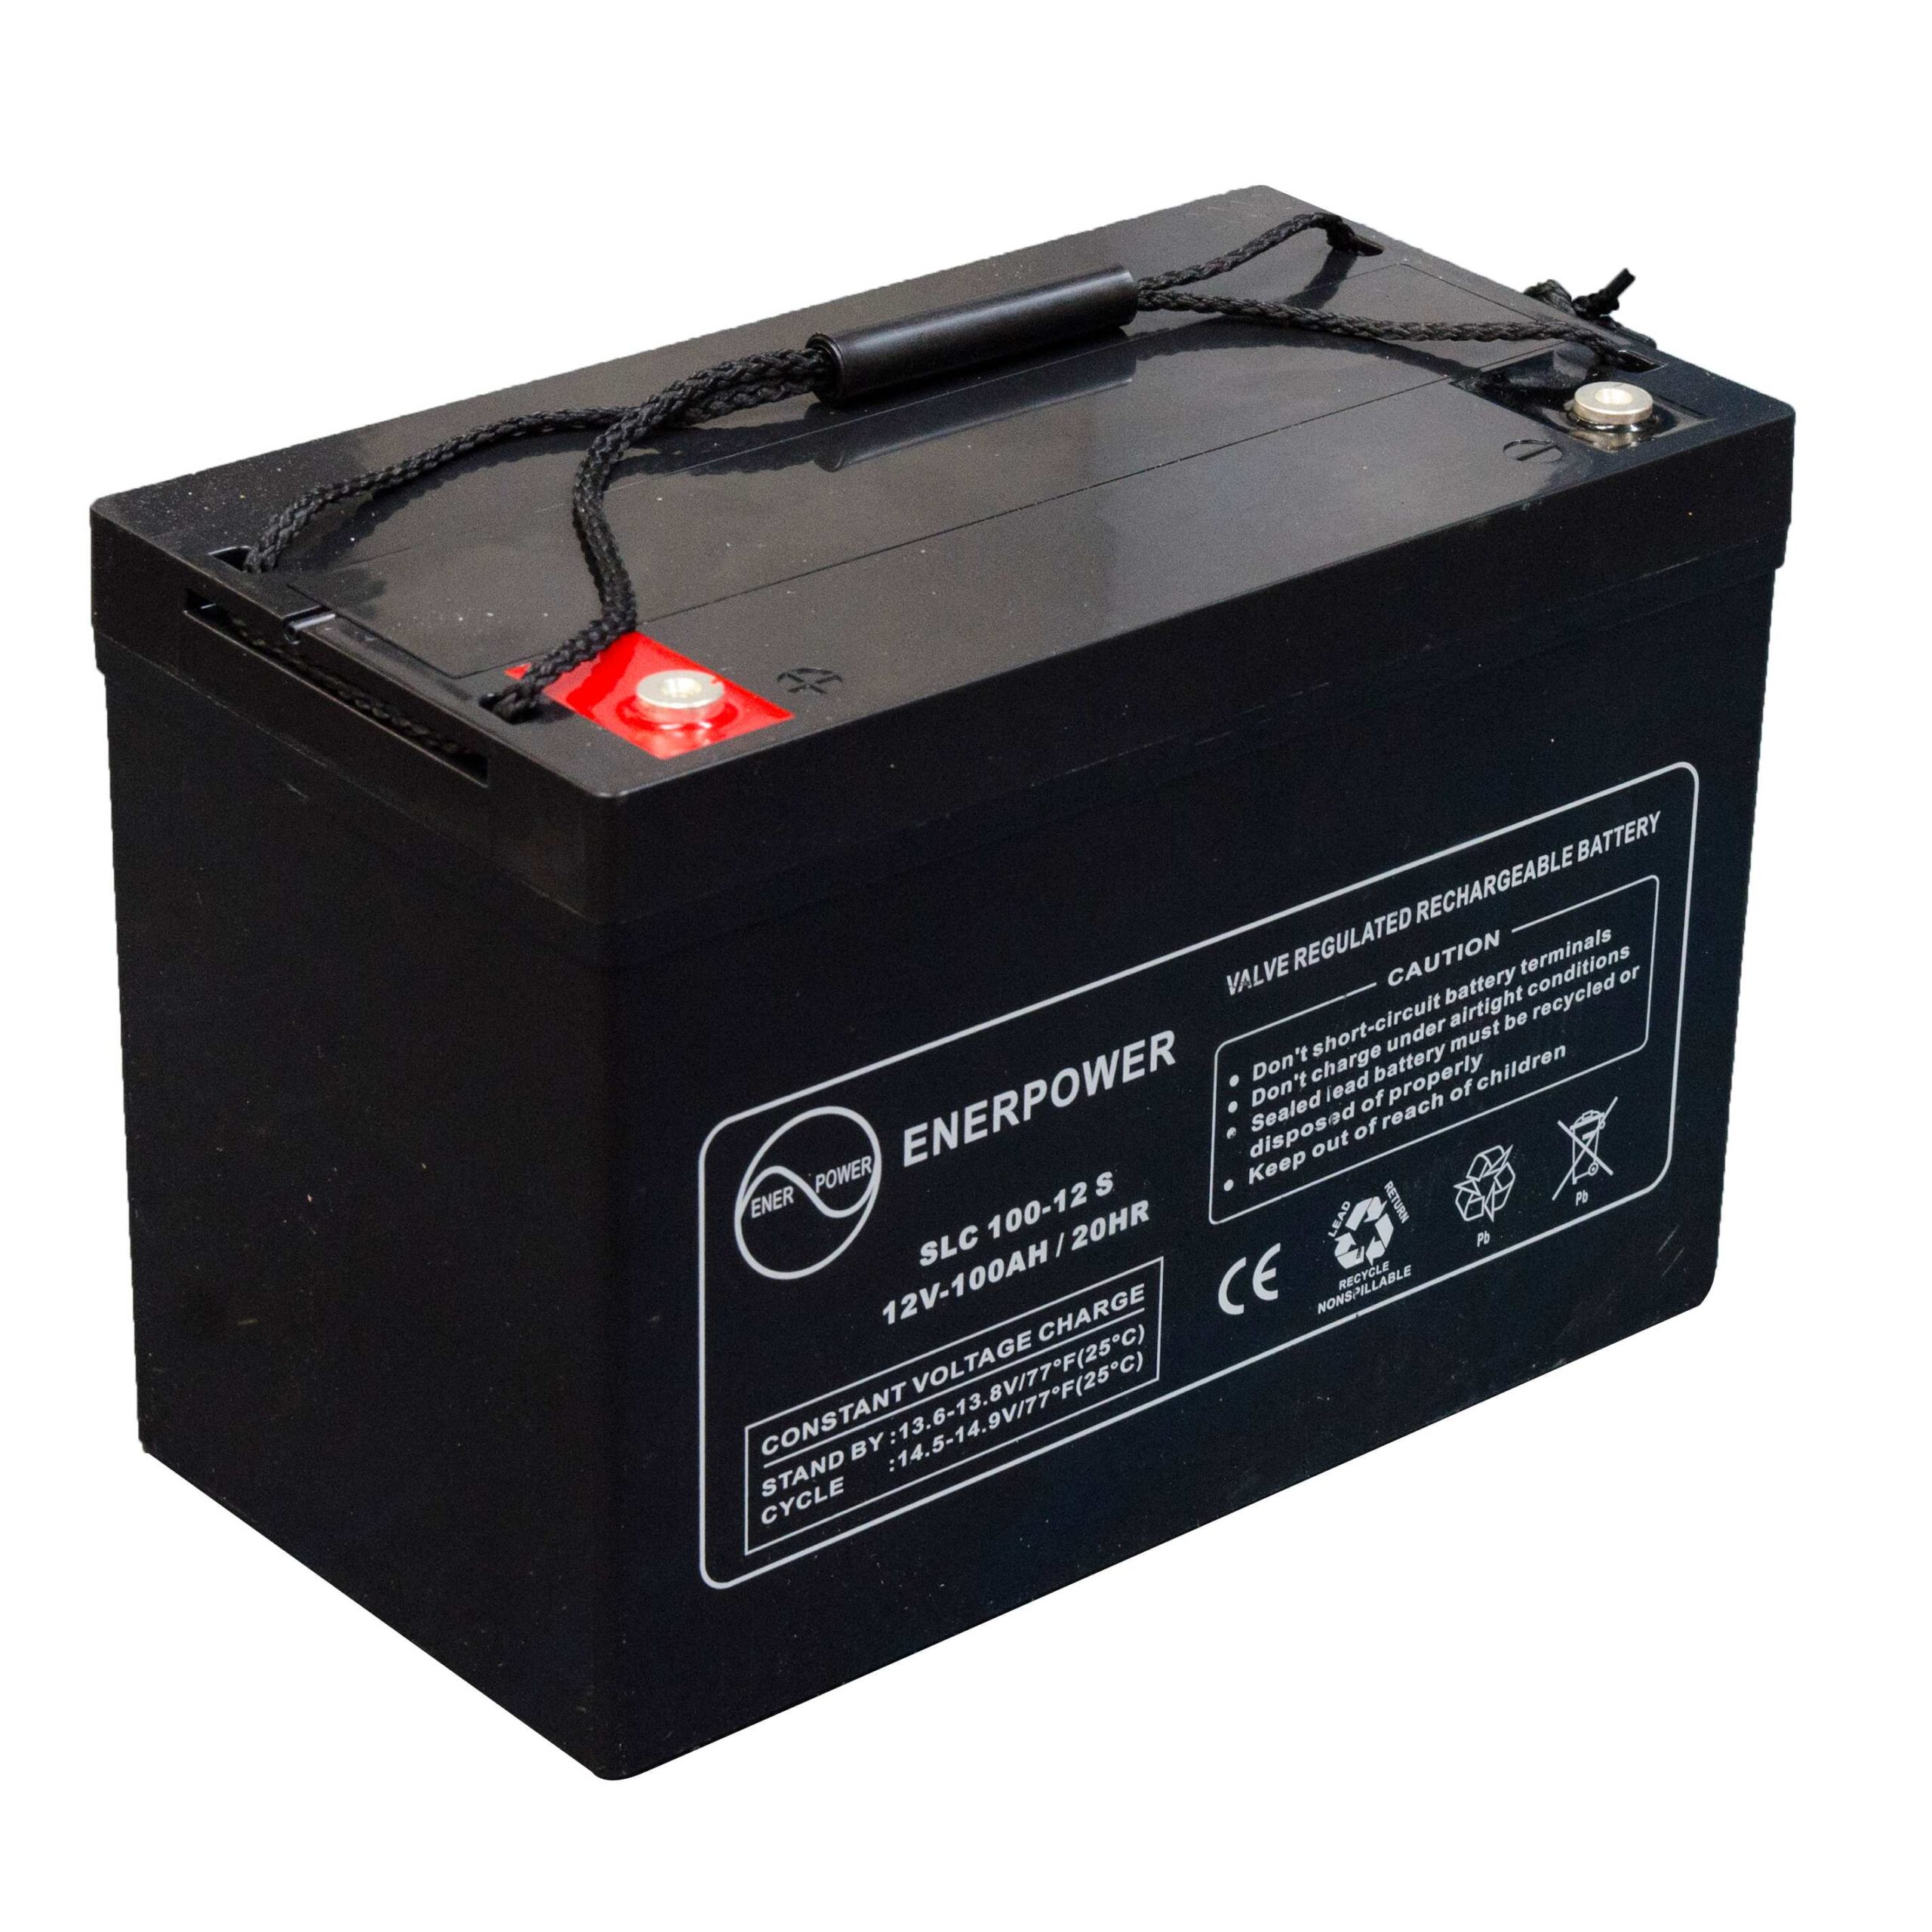 SLC100-12S 12V 100Ah AGM ENERPOWER battery